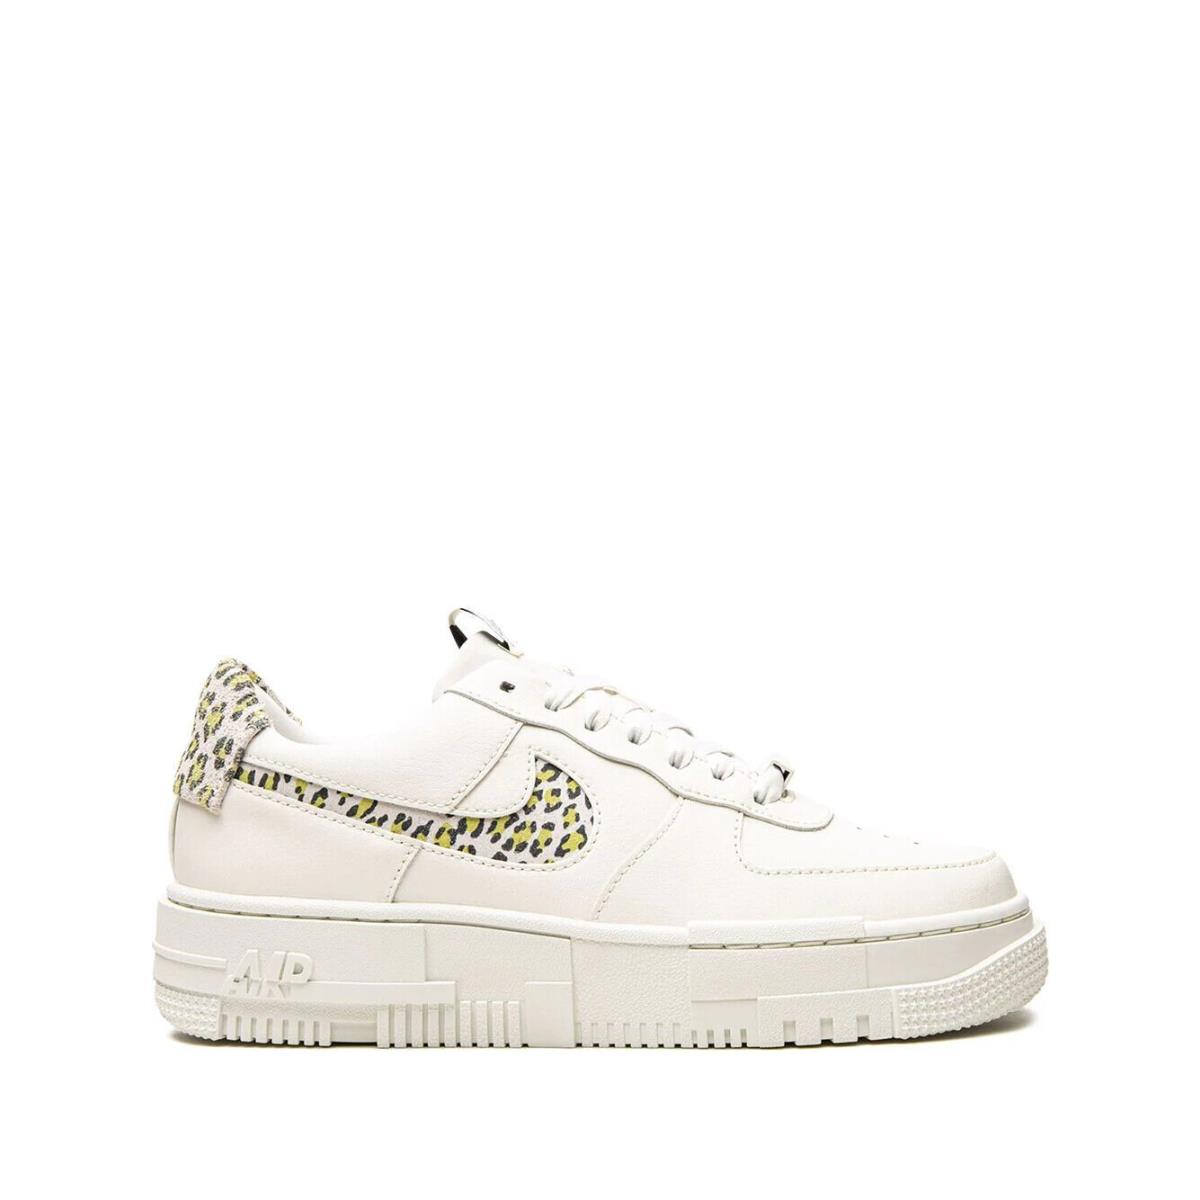 Nike Women`s Air Force 1 Pixel SE White/cheetah Casual Shoes DH9632-101 Size 12 - White